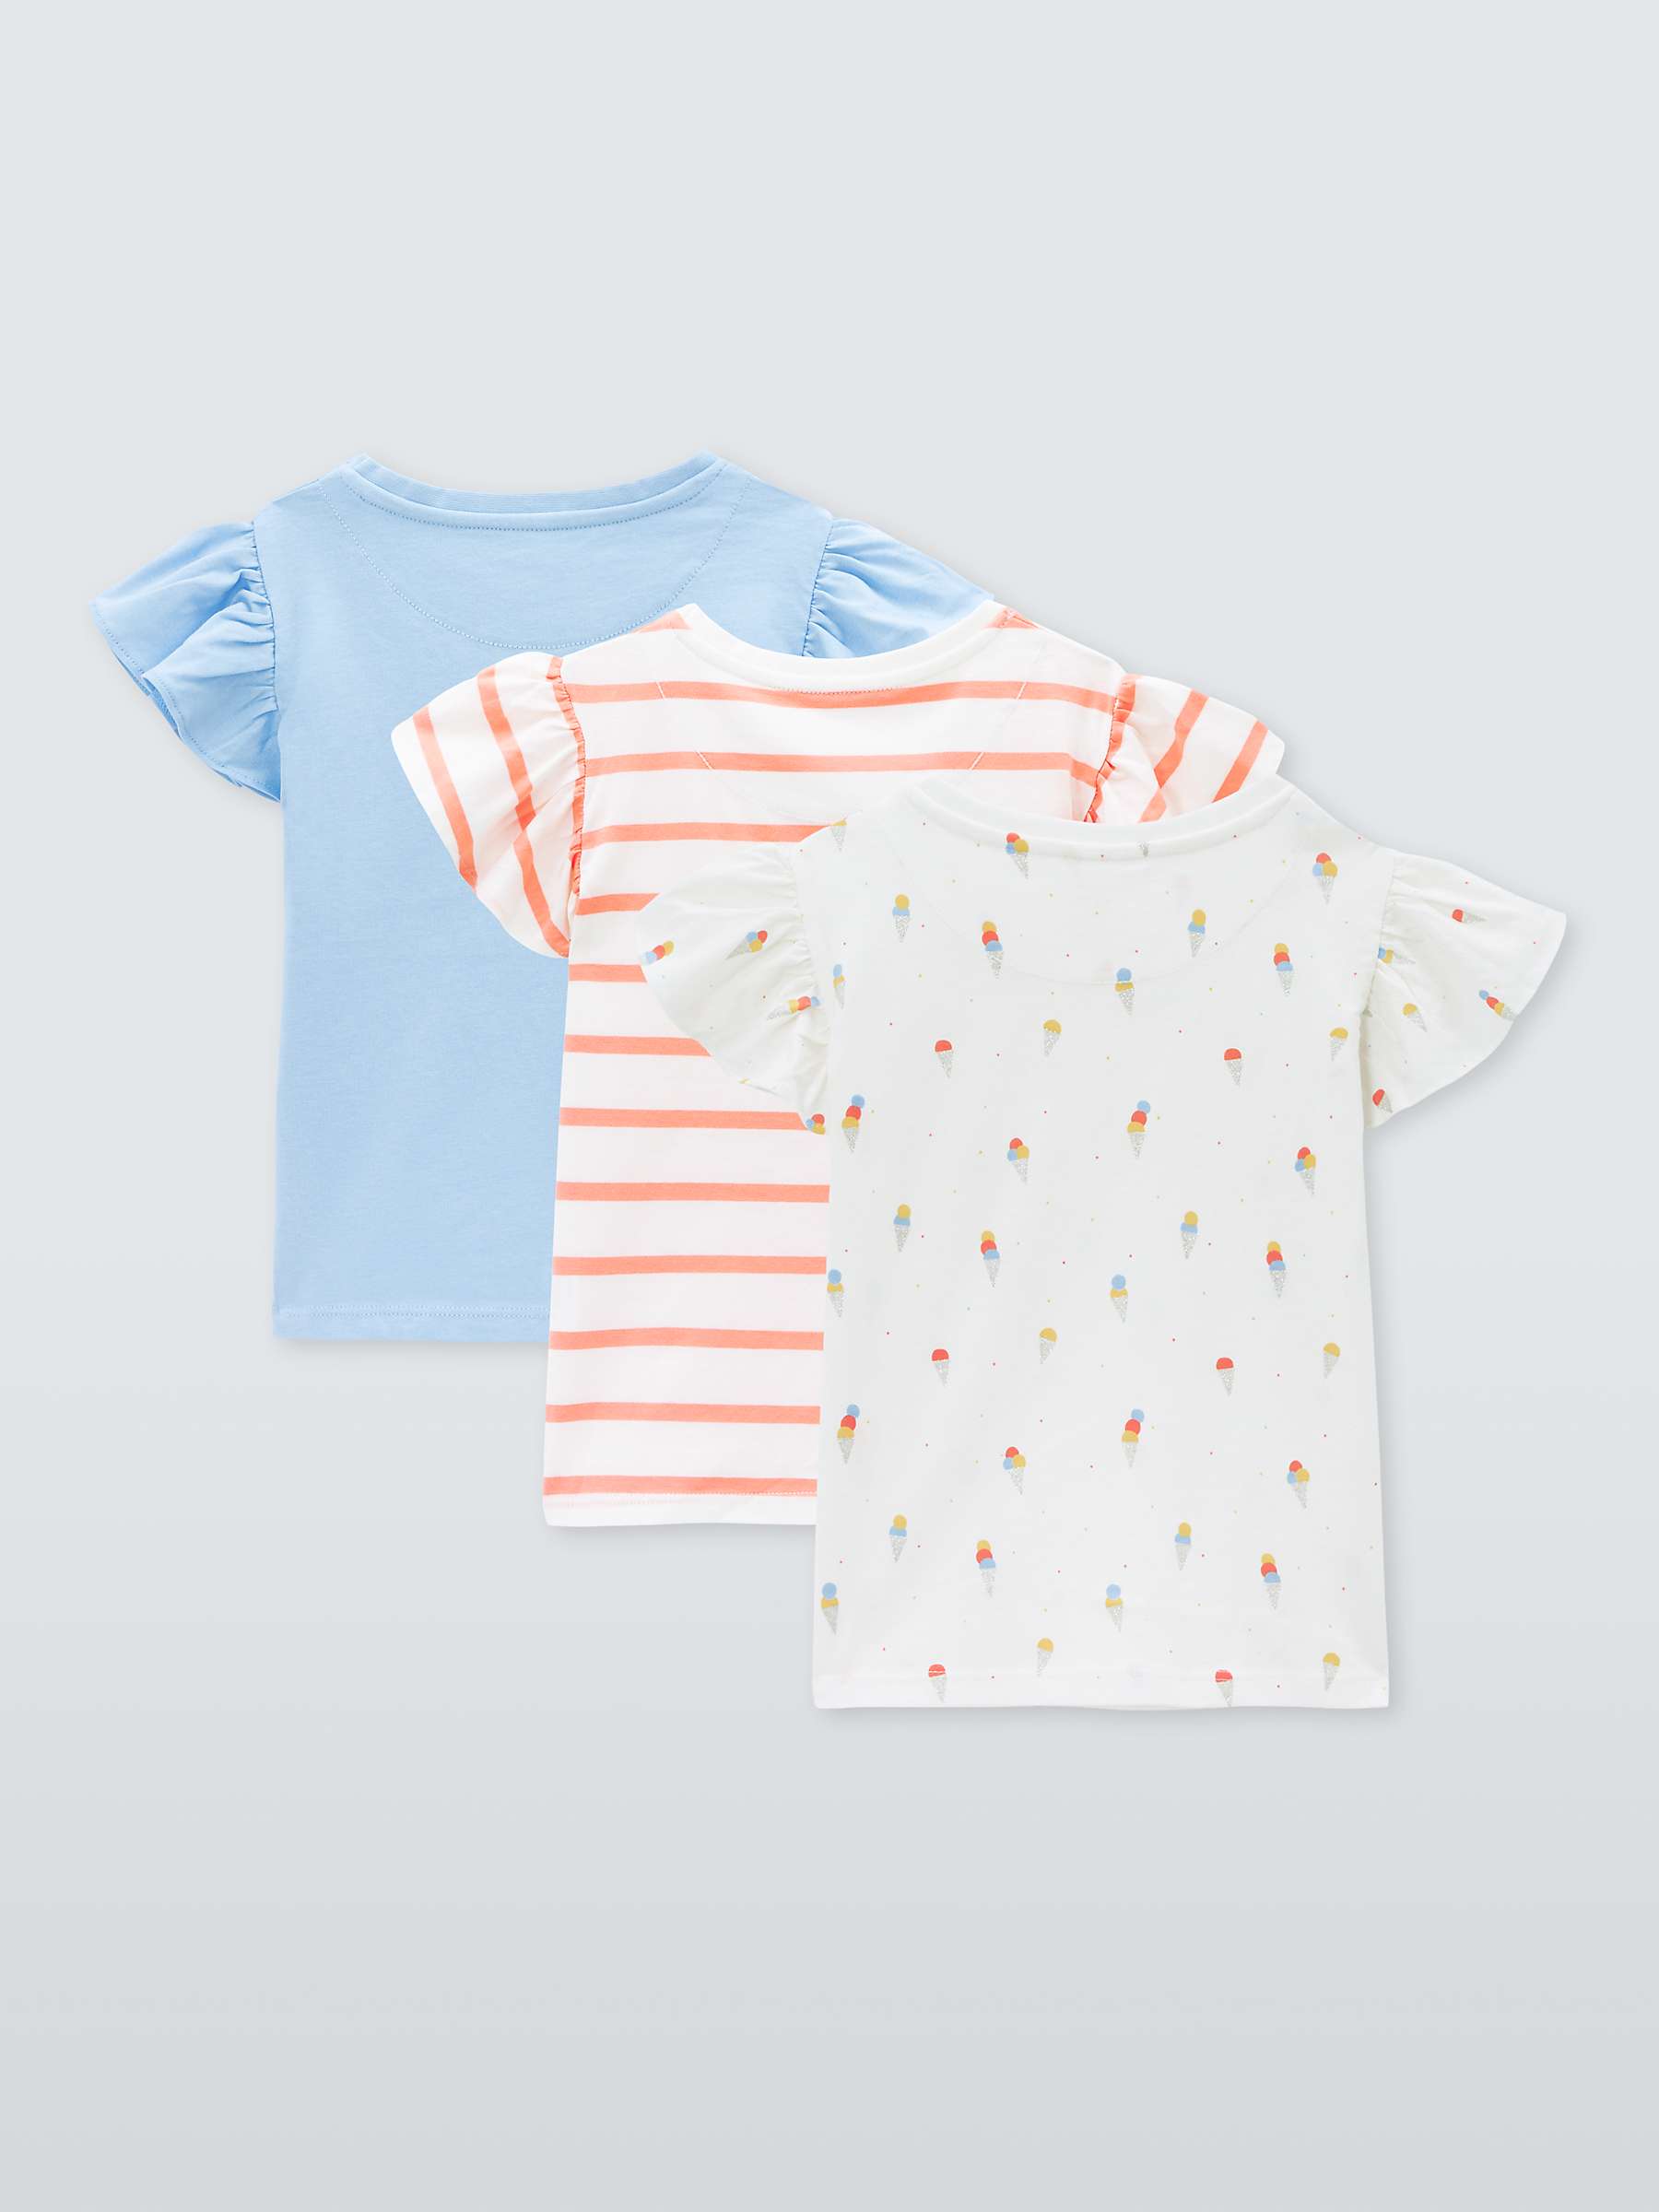 Buy John Lewis Kids' Plain/Stripe/Ice Cream Frill Sleeve T-Shirts, Pack of 3, Multi Online at johnlewis.com